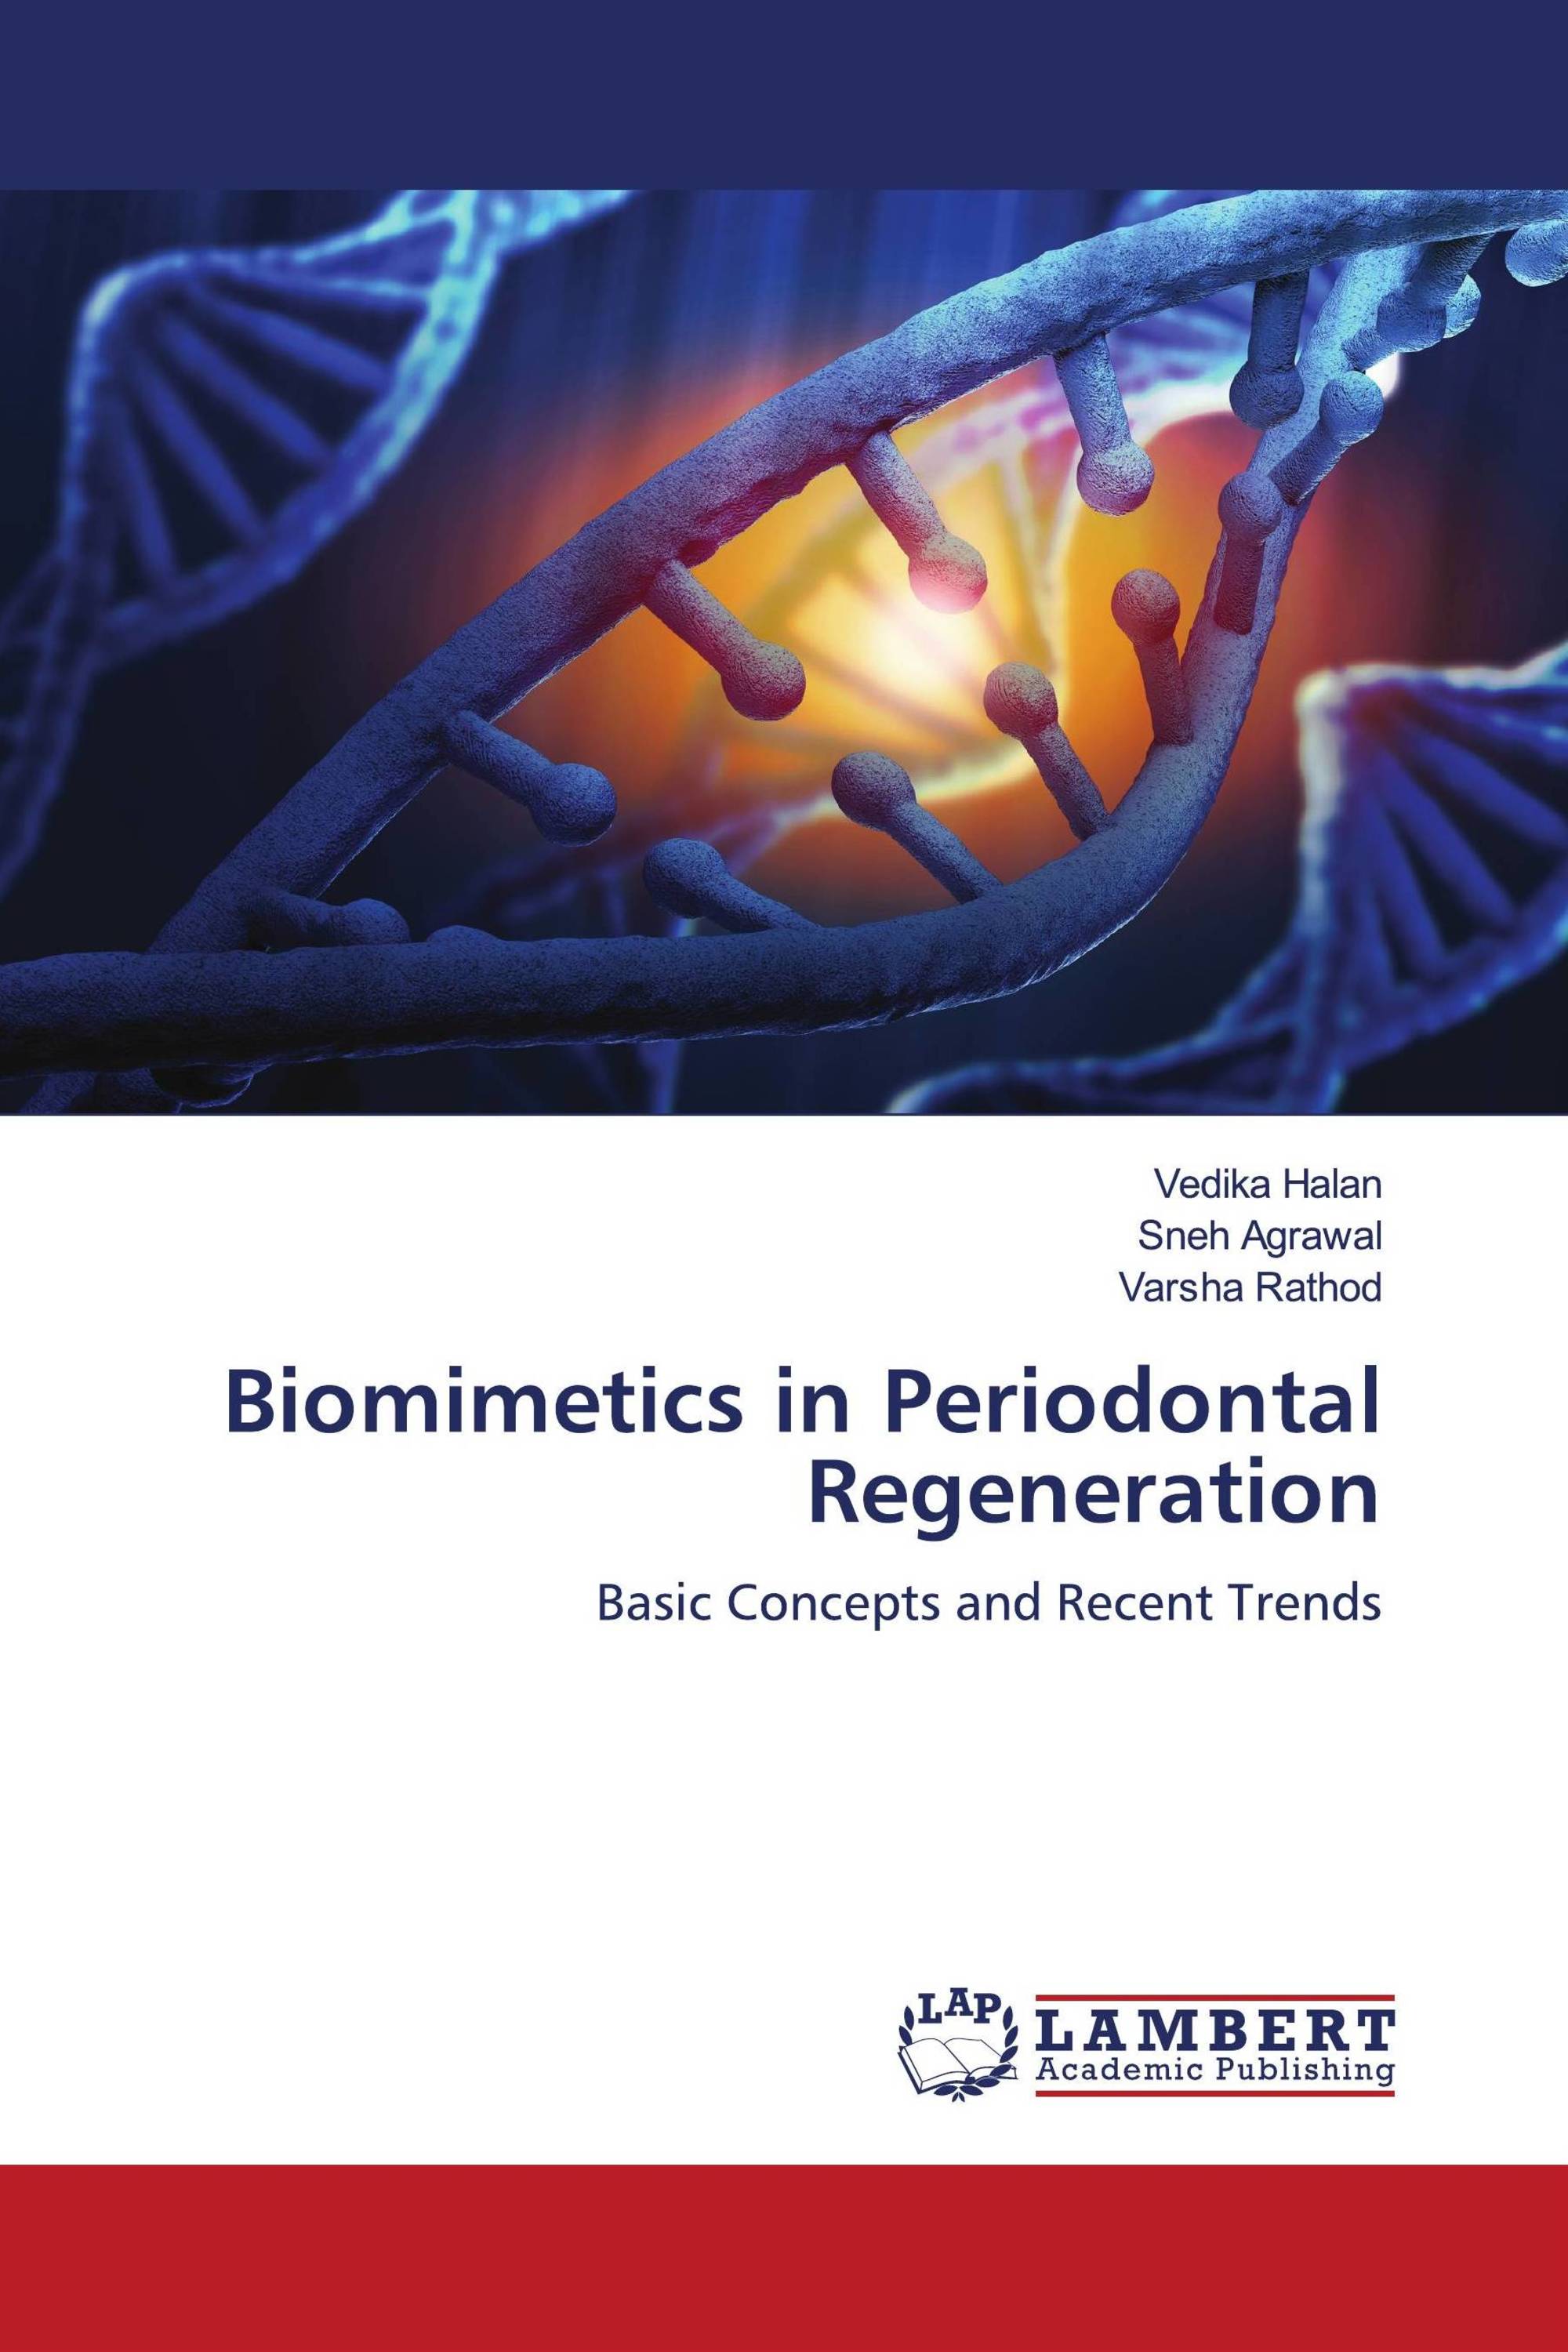 Biomimetics in Periodontal Regeneration